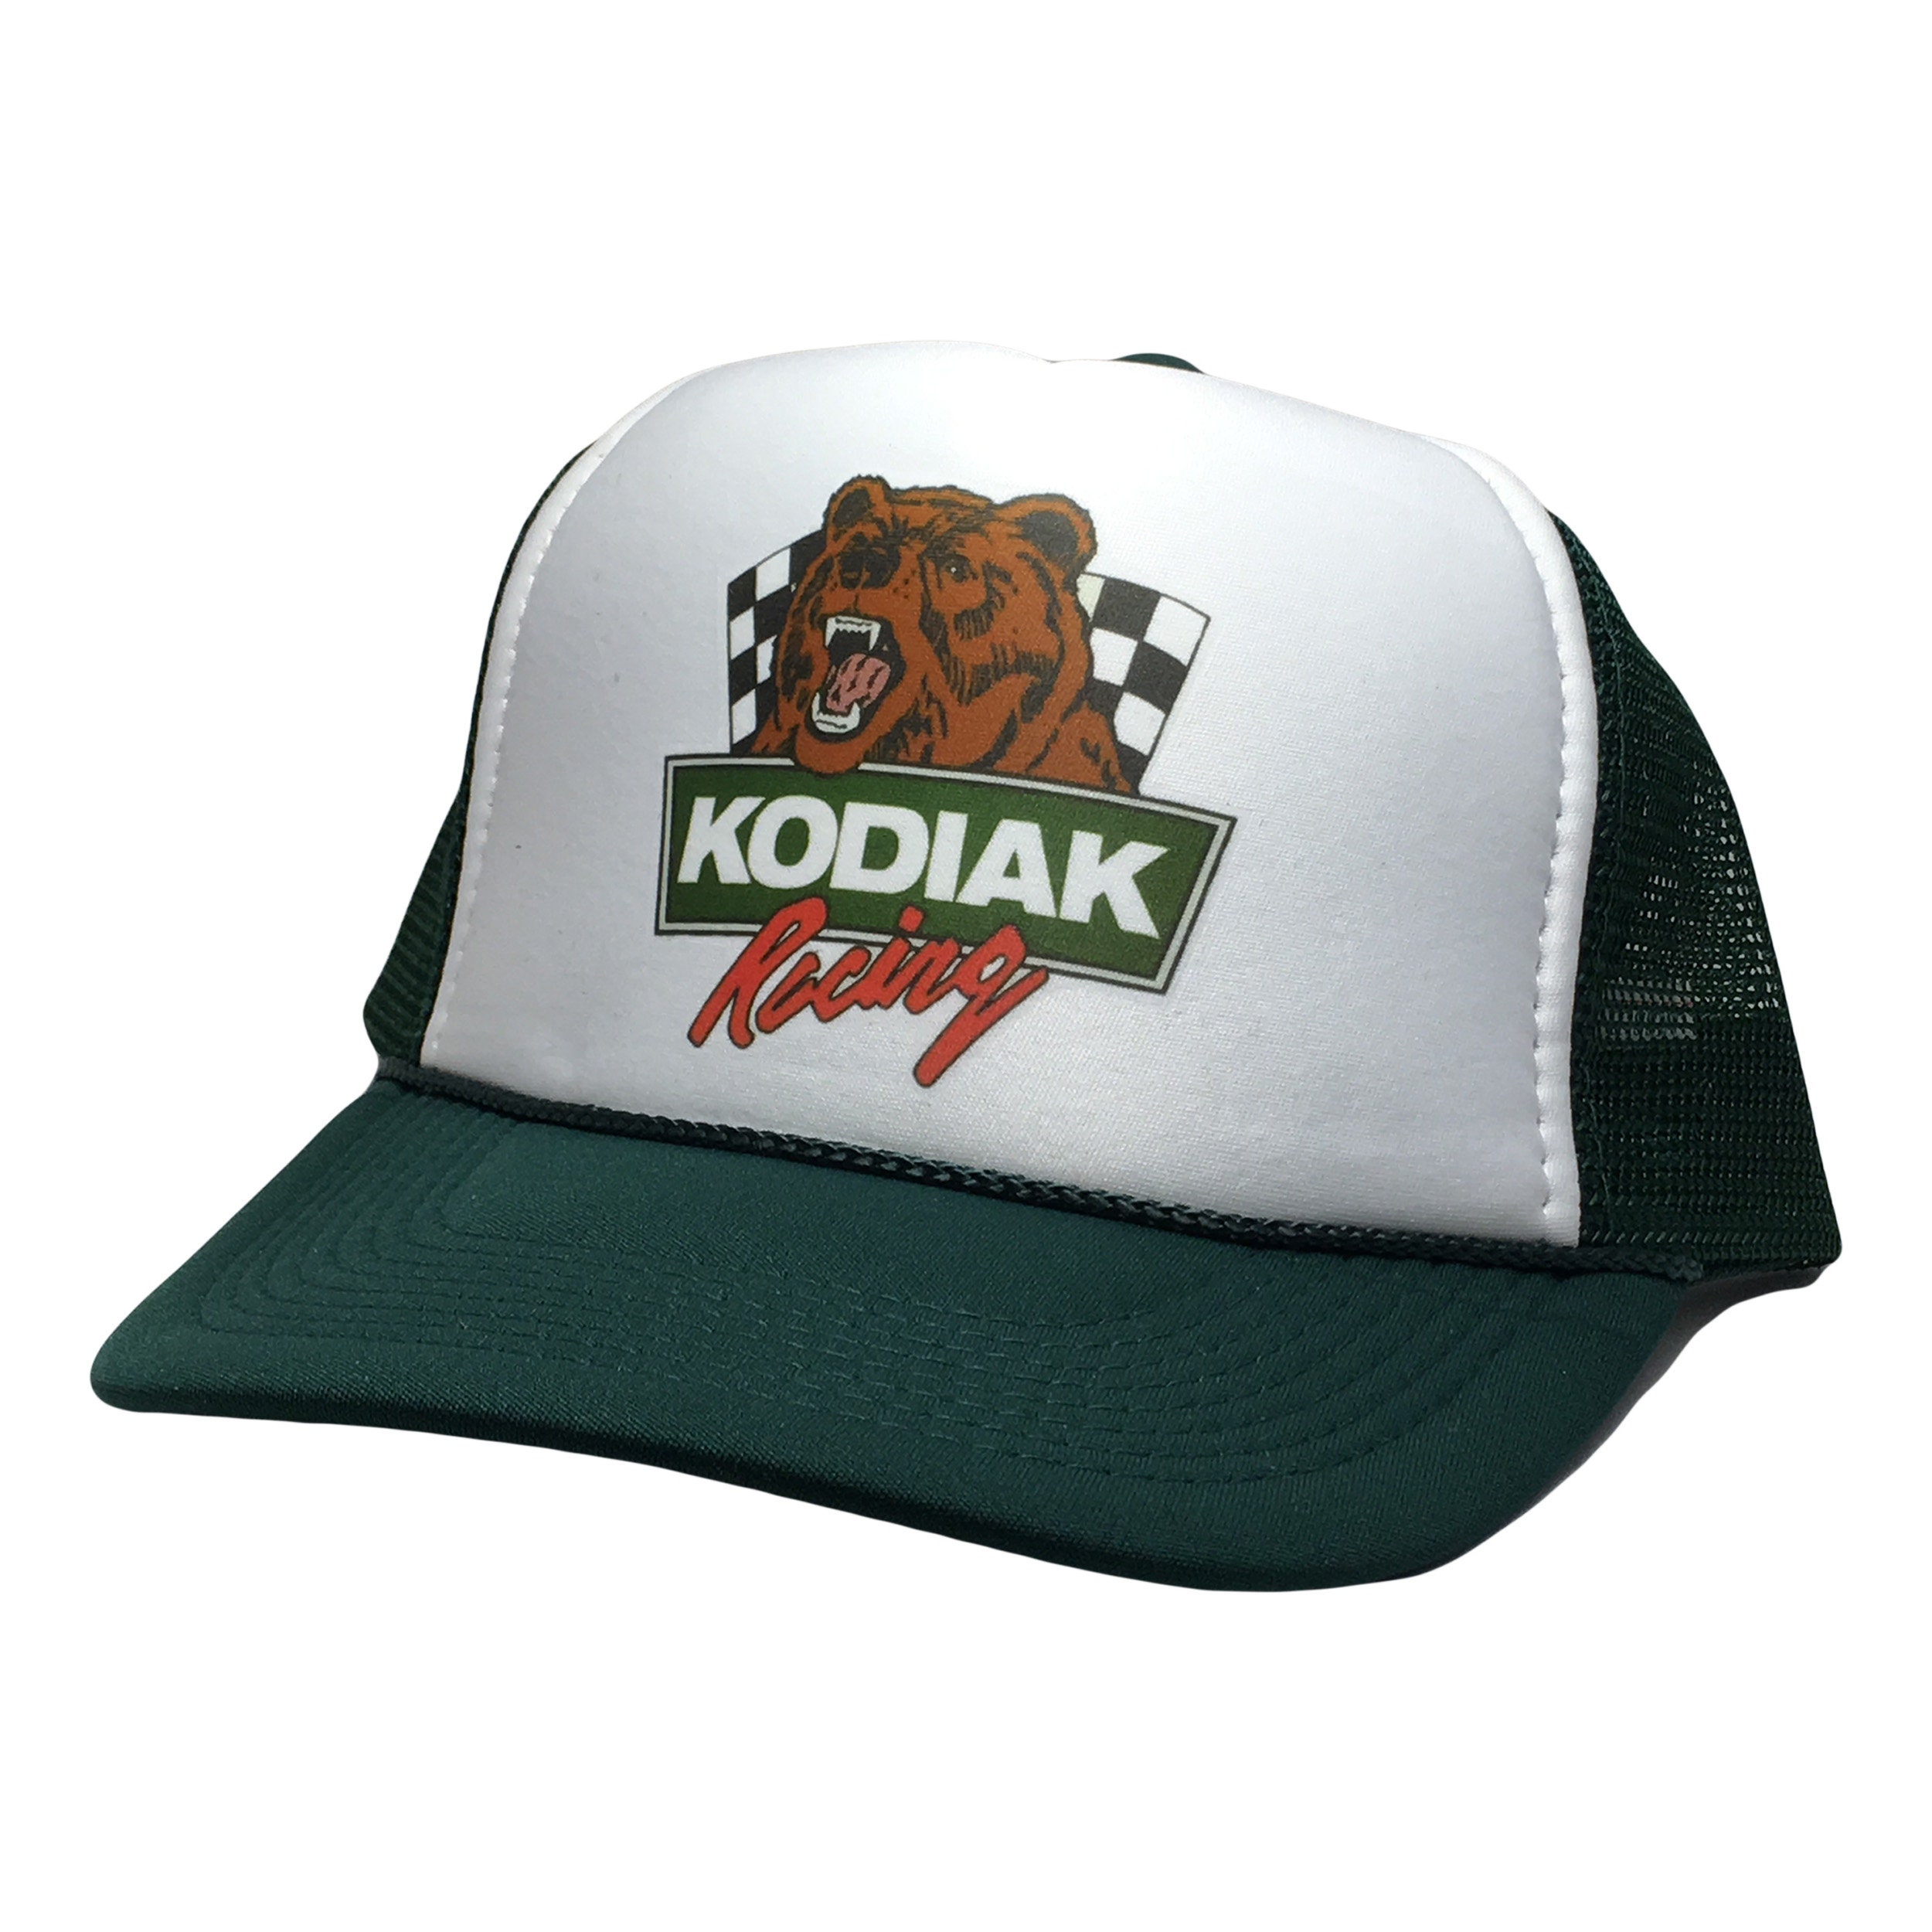 Kodiak Racing Trucker Hat Mesh Hat Vintage Snapback Hat Dark Green